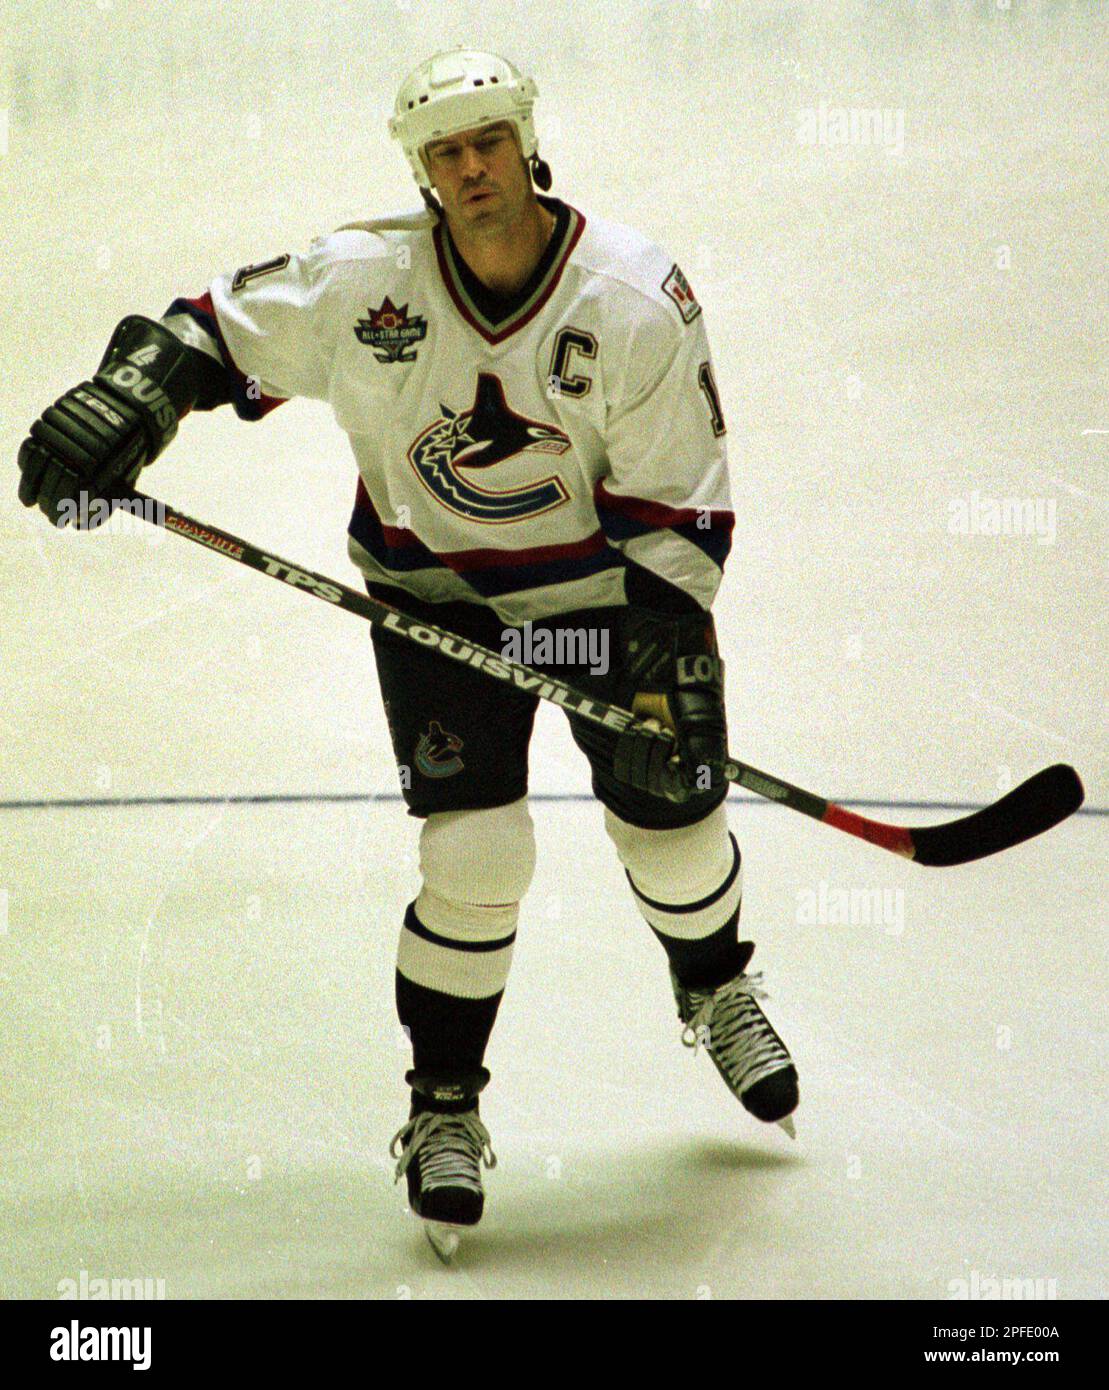 NY Rangers captain Mark Messier at '01-'02 season opener, wearing